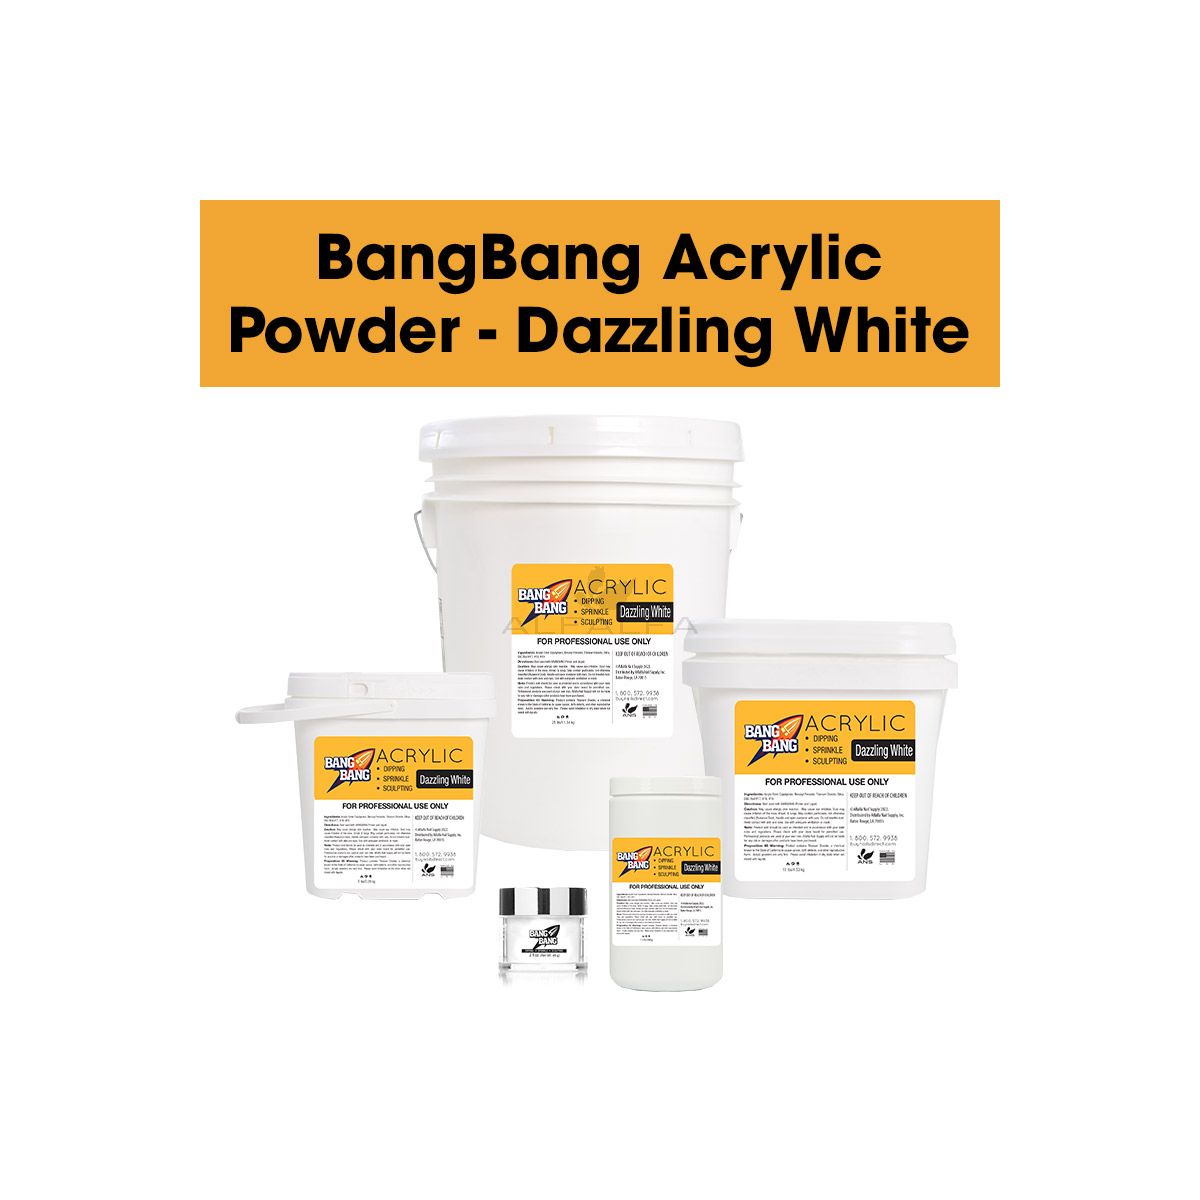 BangBang Acrylic Powder - Dazzling White